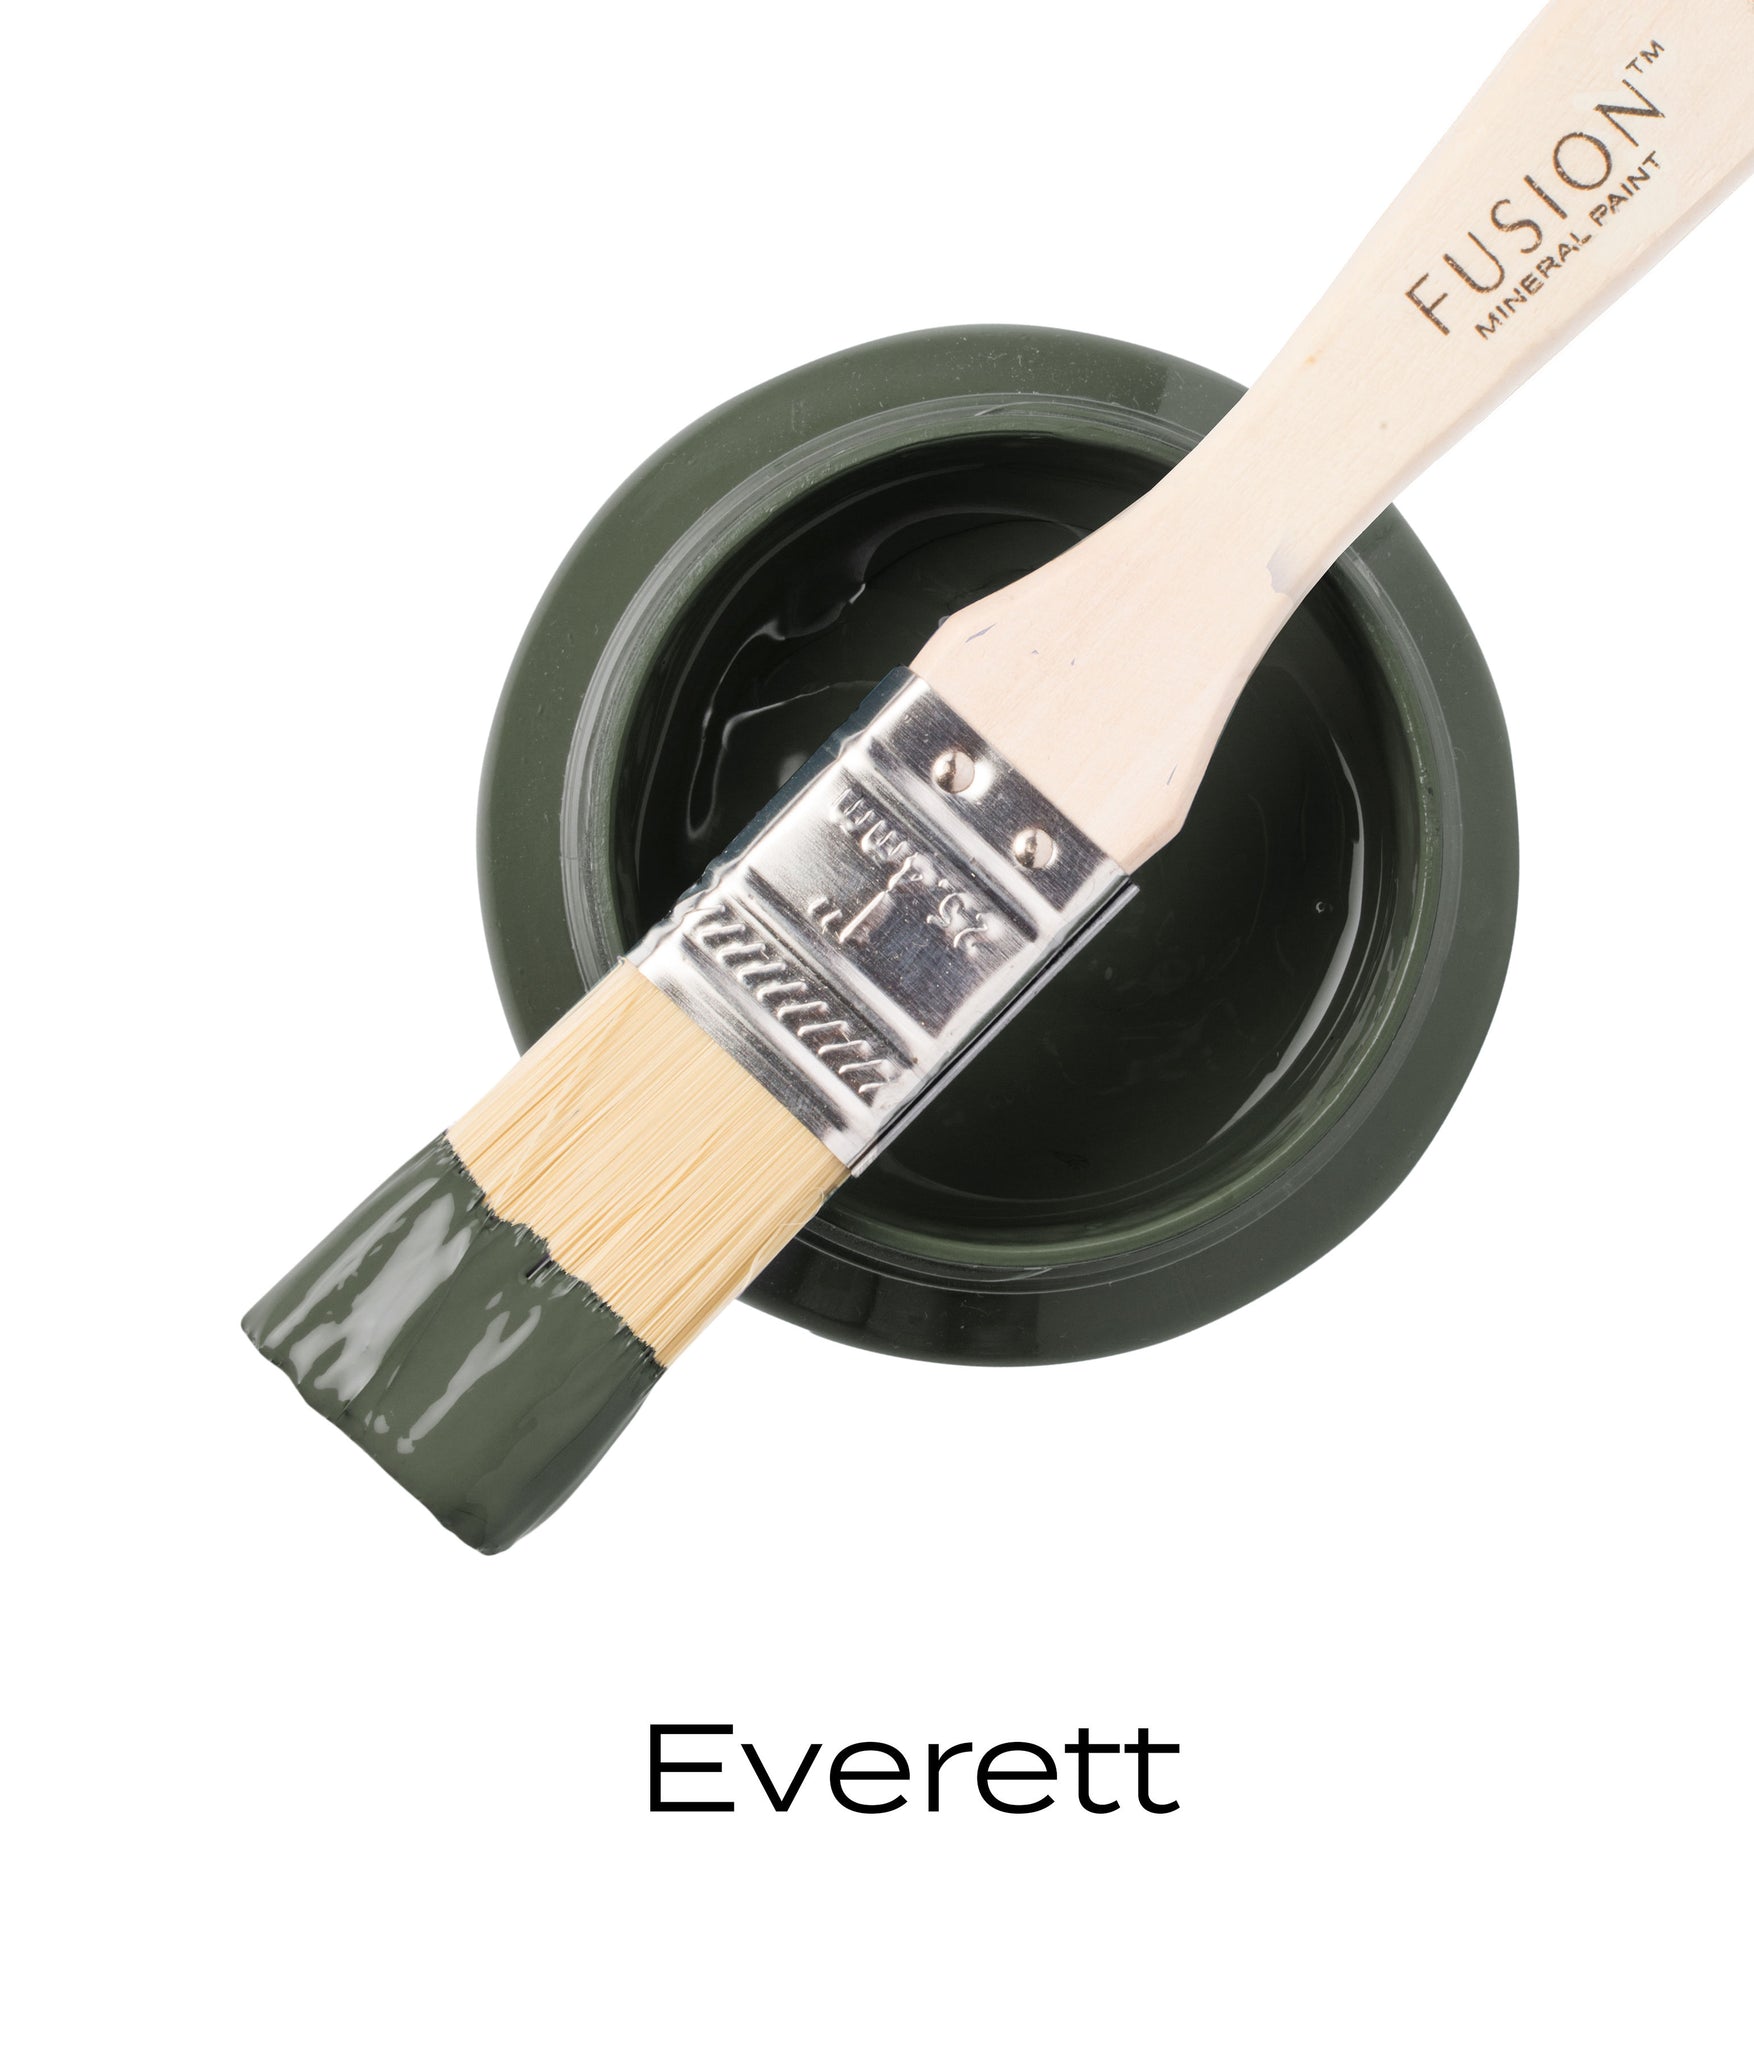 Everett Fusion Mineral Paint - Pint